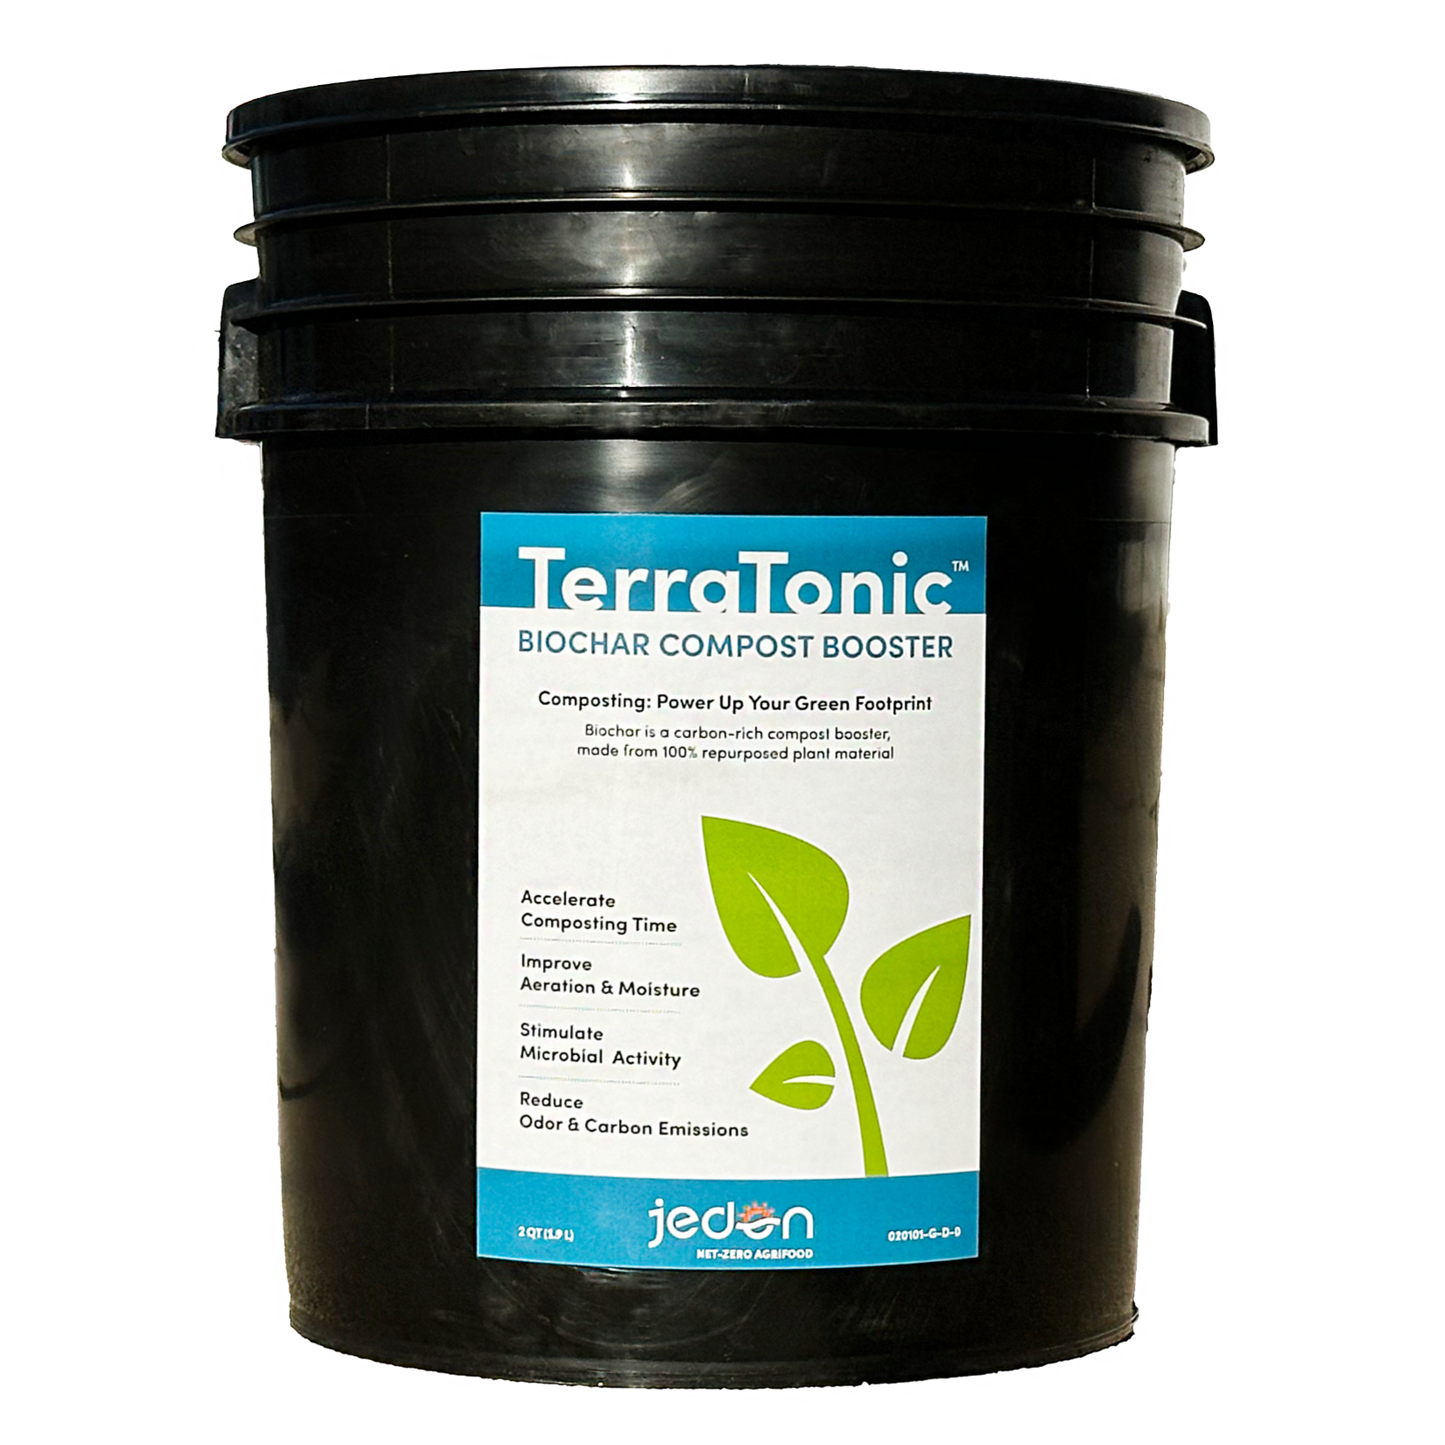 TerraTonic Biochar Compost Booster